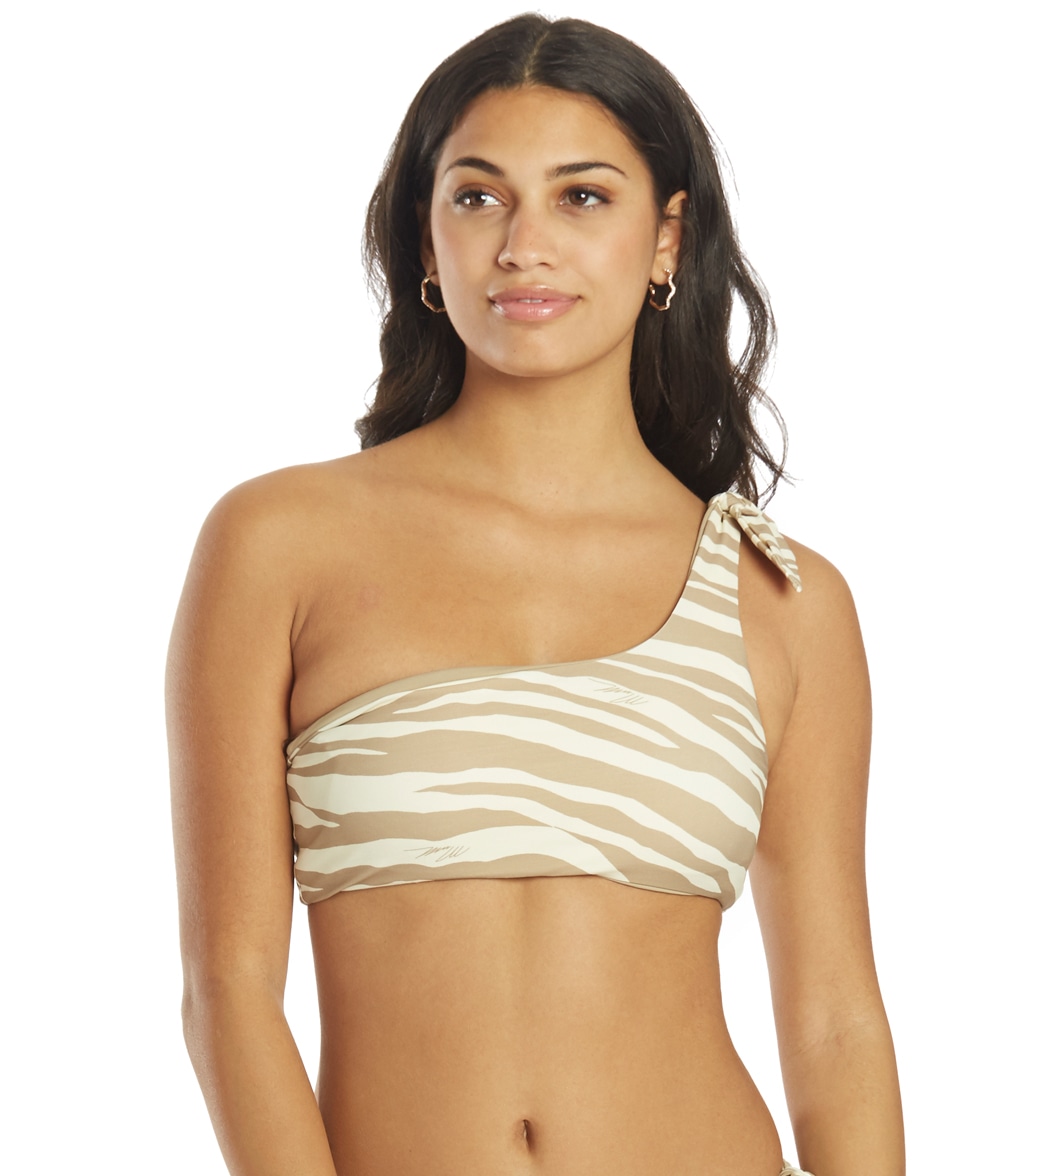 Michael Kors Women's Reversible Zebra One Shoulder Bikini Top - Khaki Large - Swimoutlet.com